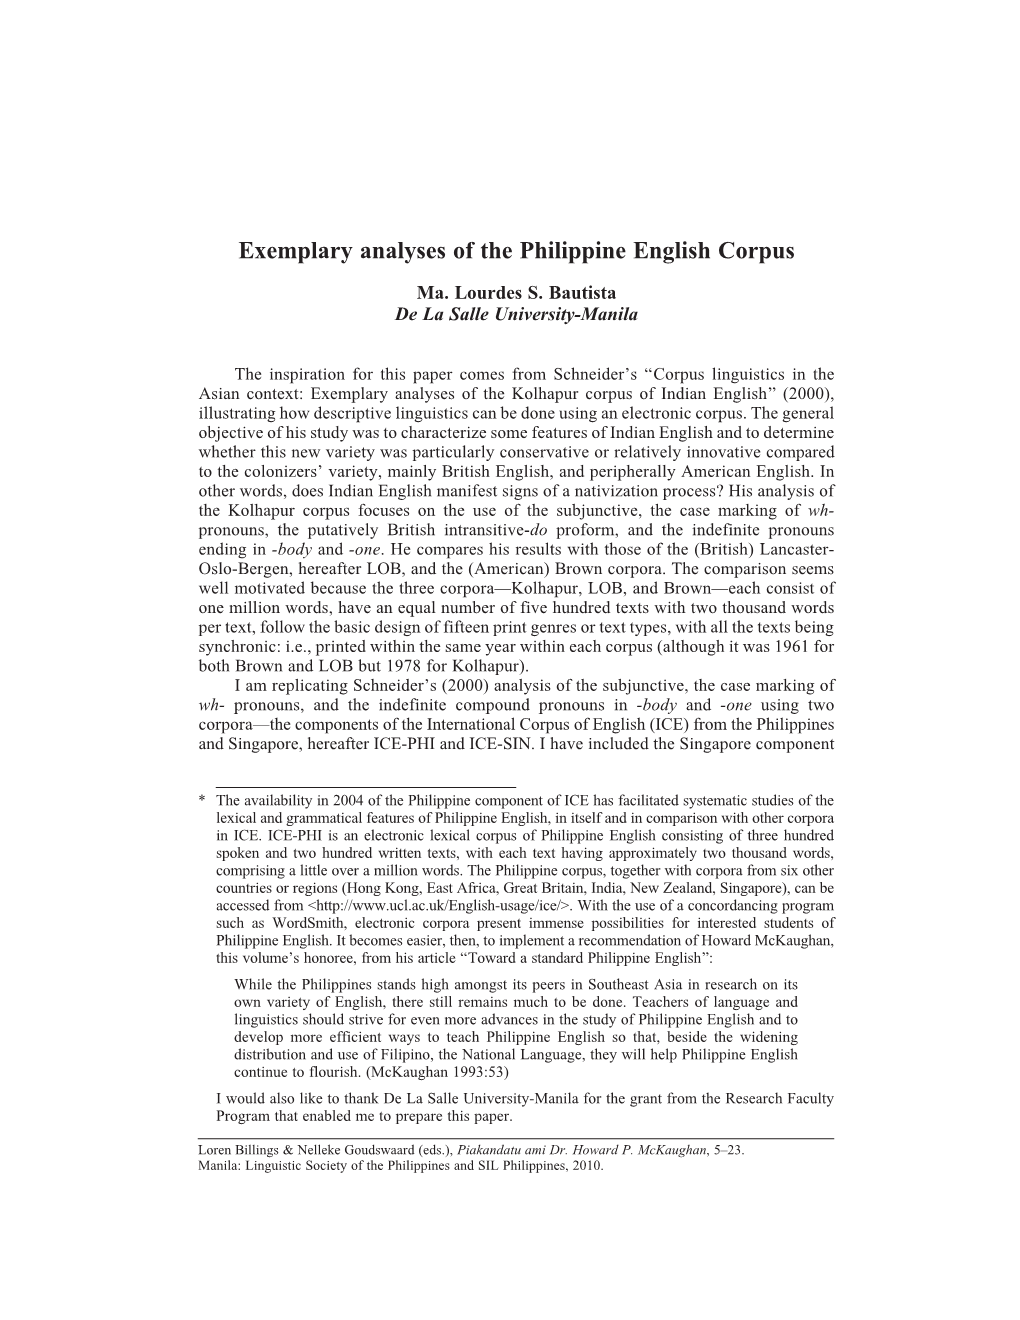 Exemplary Analyses of the Philippine English Corpus